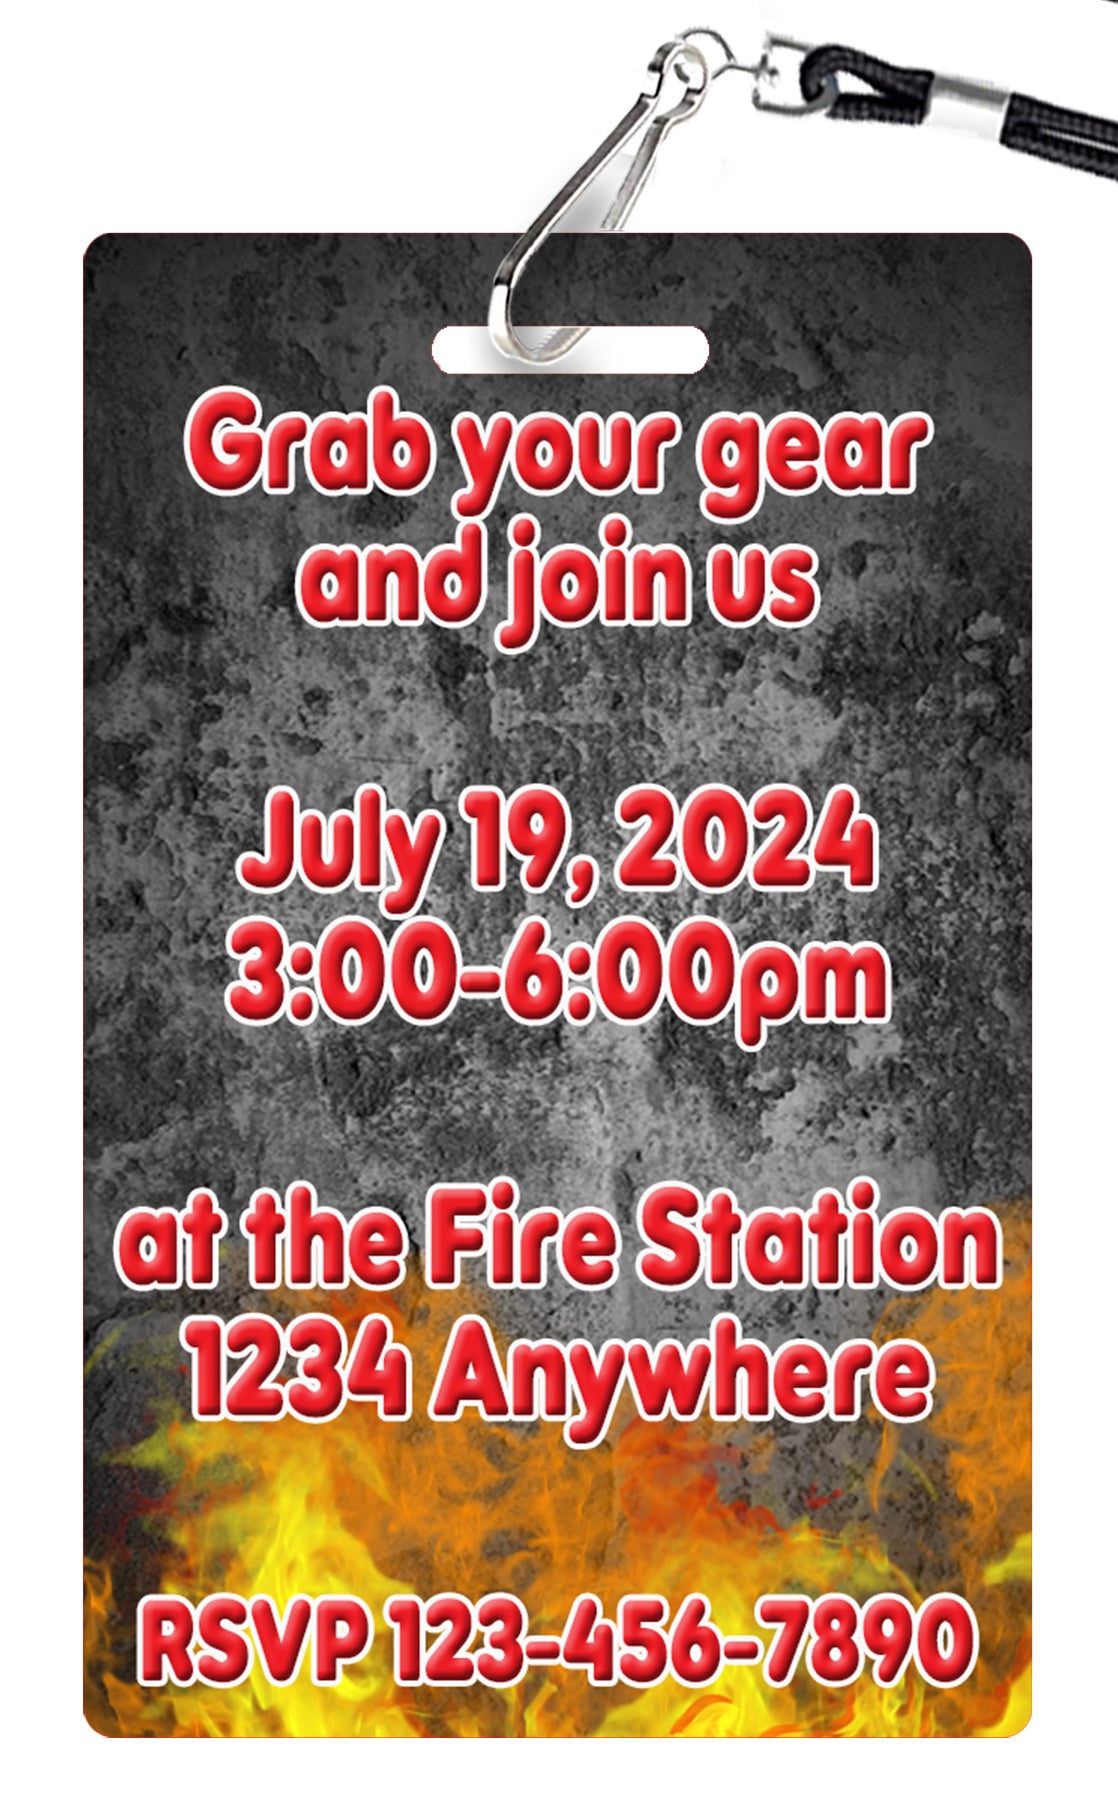 Firefighter Birthday Invitation